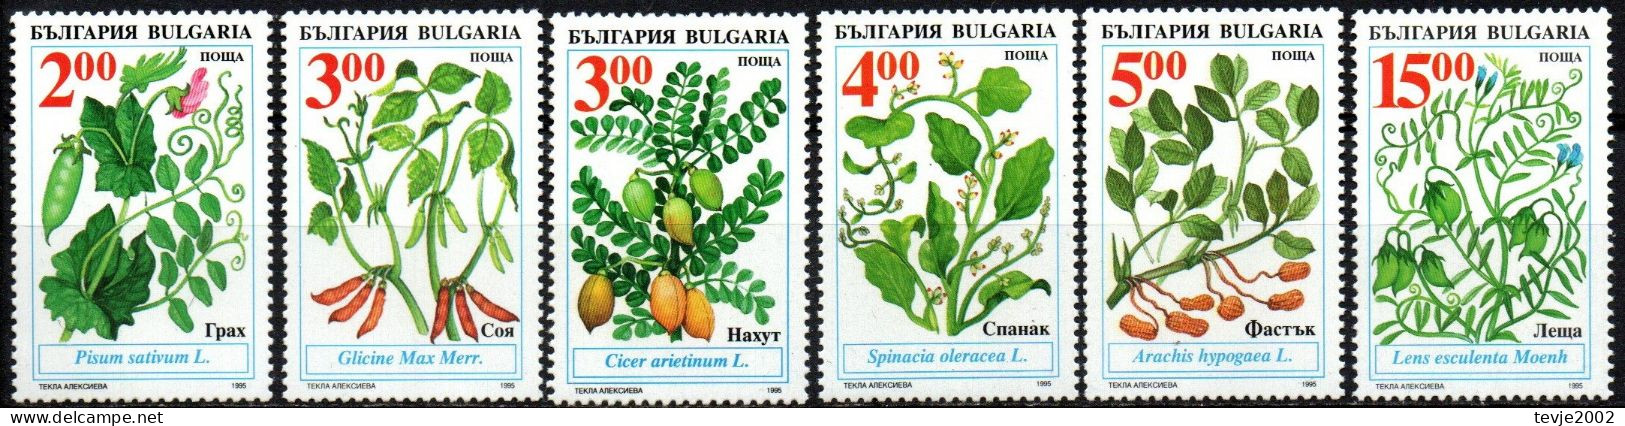 Bulgarien 1995 - Mi.Nr. 4168 - 4173 - Postfrisch MNH - Pflanzen Plants Gemüse Crops - Groenten